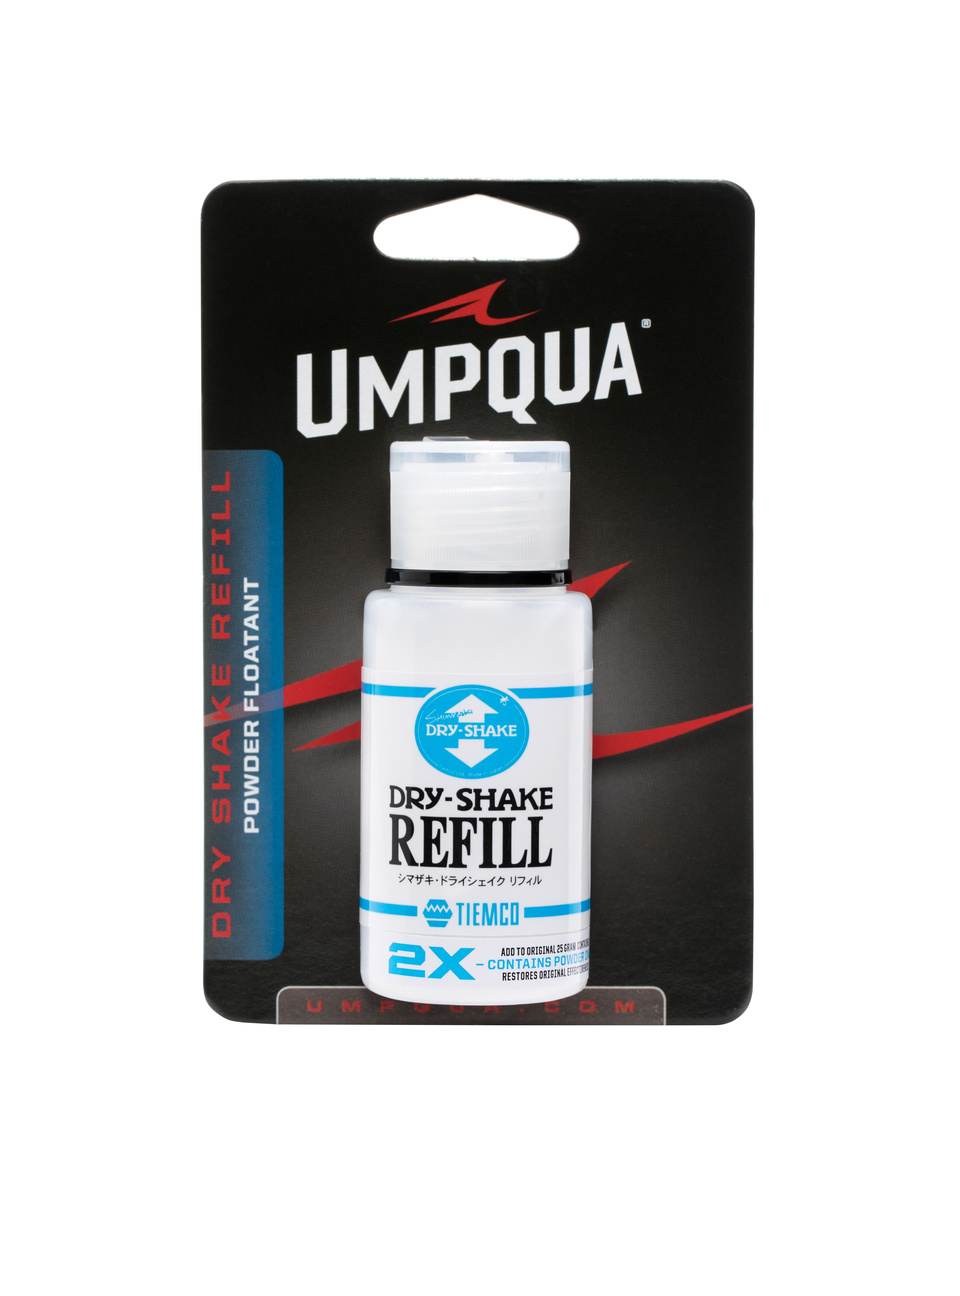 Umpqua Feather Merchants TMC Dry Shake Refill 2X (10CT)